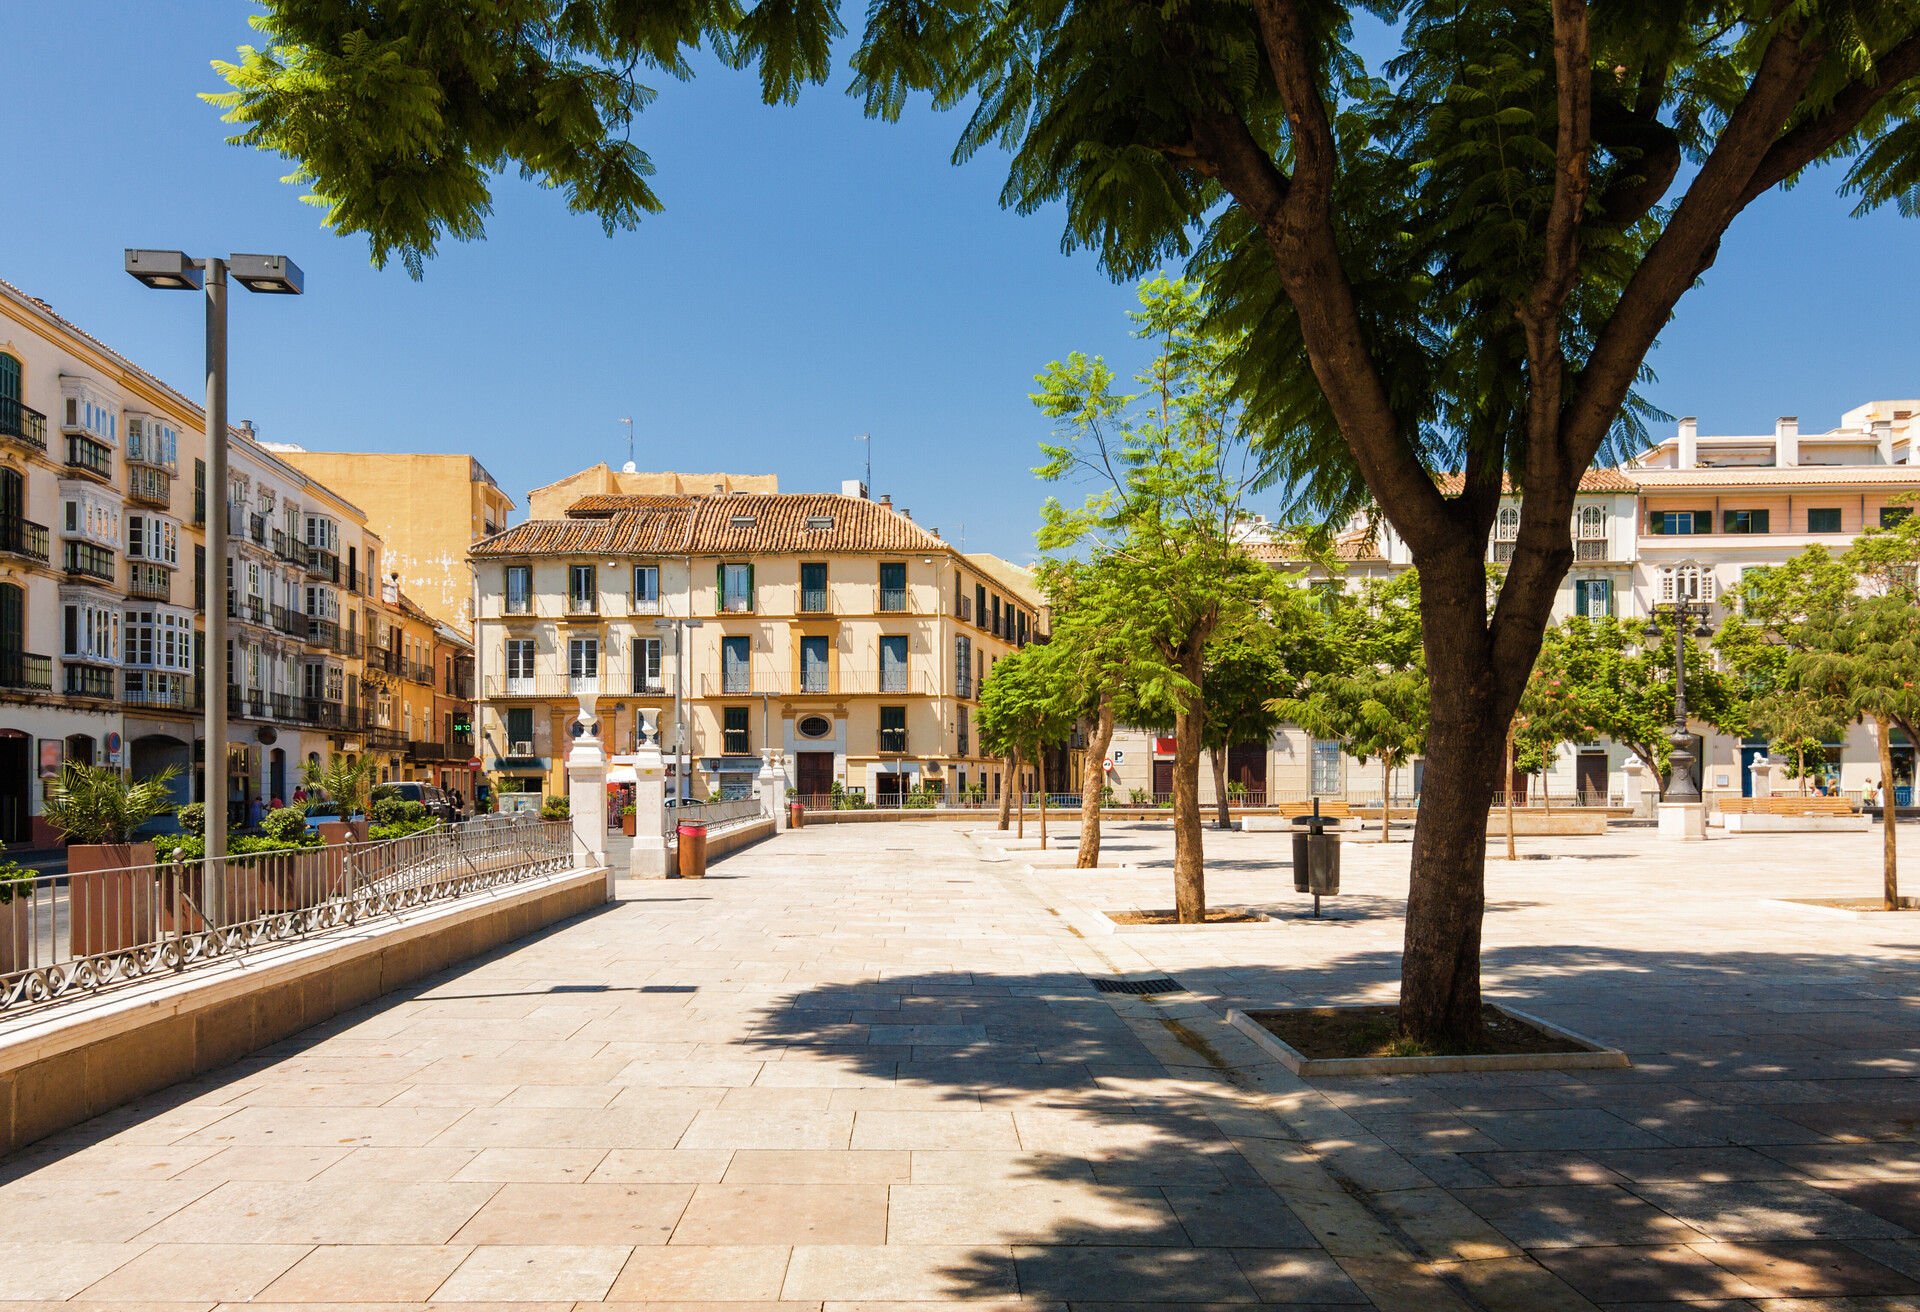 Monument of Plaza de la Merced, Malaga, Andalusia province, Spain.